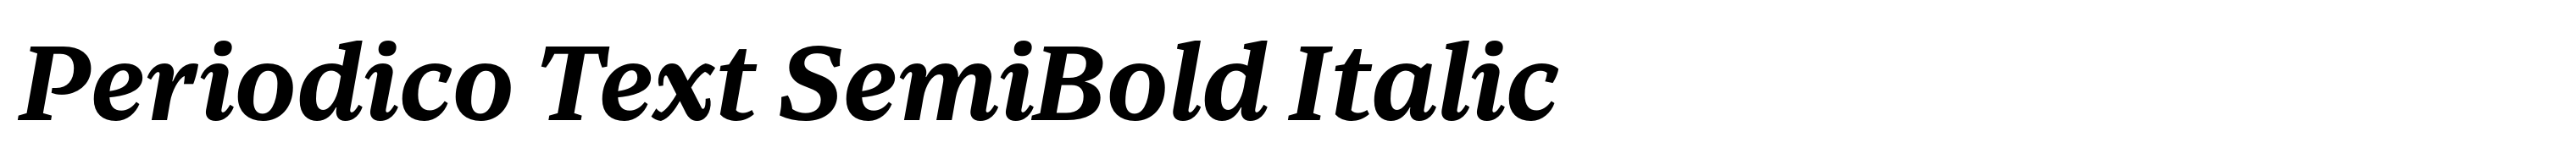 Periodico Text SemiBold Italic